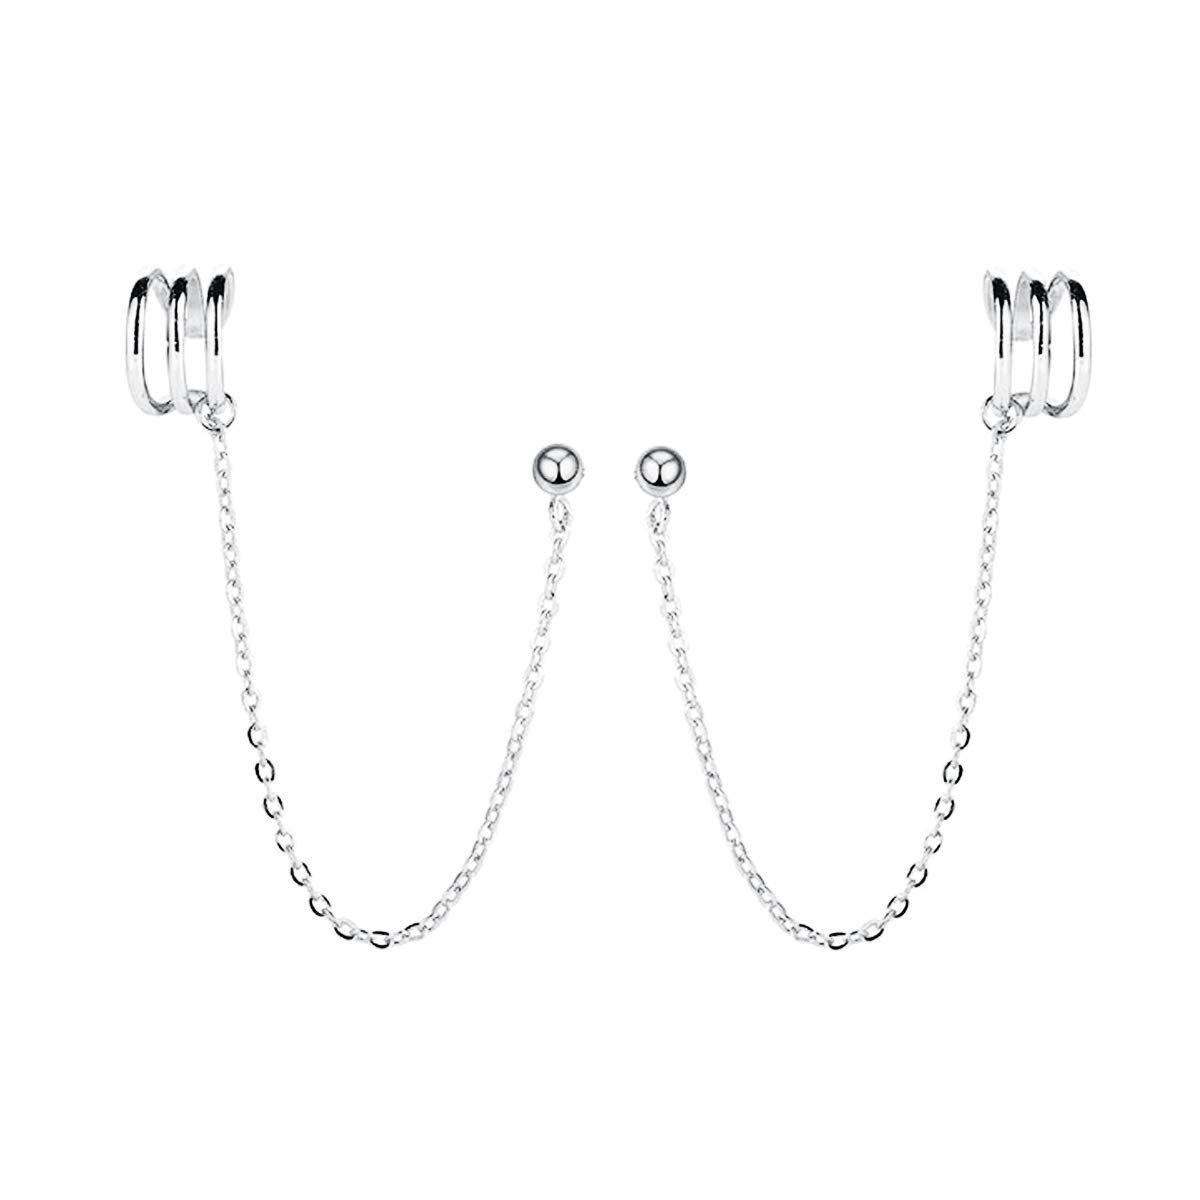 POCHUMIDUU Paar Ohrhänger 925 Sterling Silber Manschette Ohrring,Damen Ohrstecker, Kette für Frauen Mädchen Kletterer Ohrringe